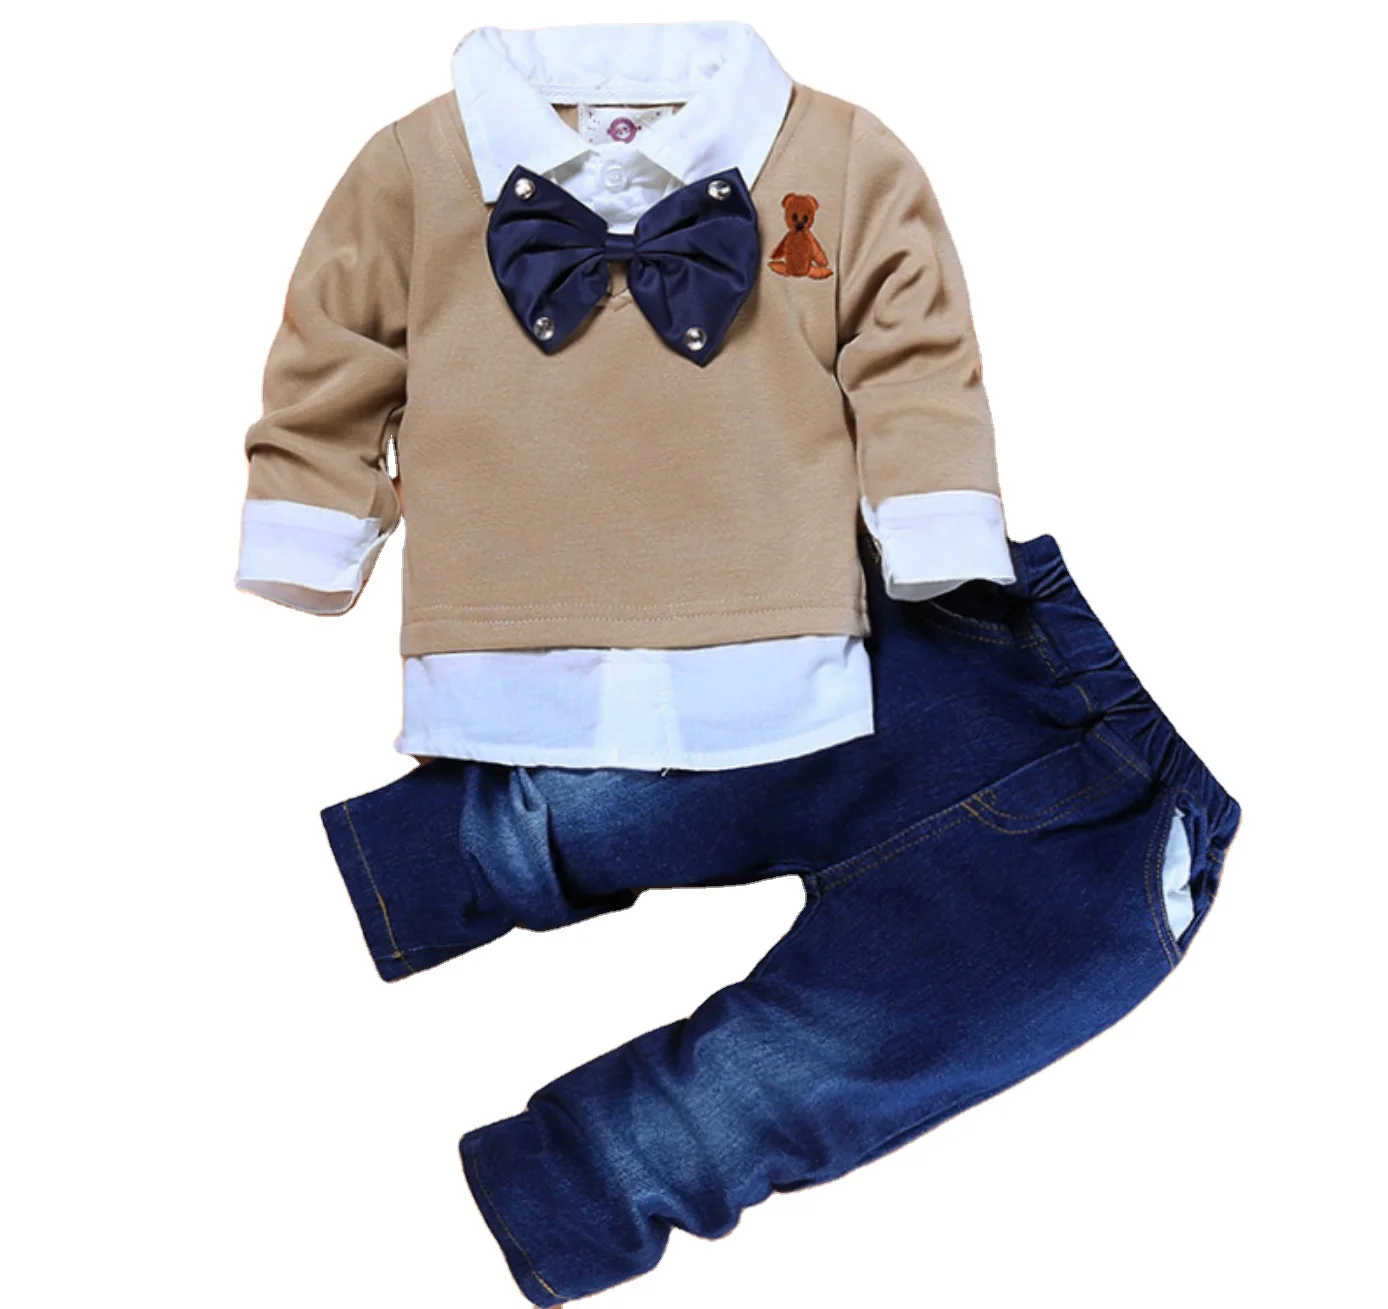 

European Designer Kids Clothes Children Clothes Sets For Boys Online, Please refer to color chart